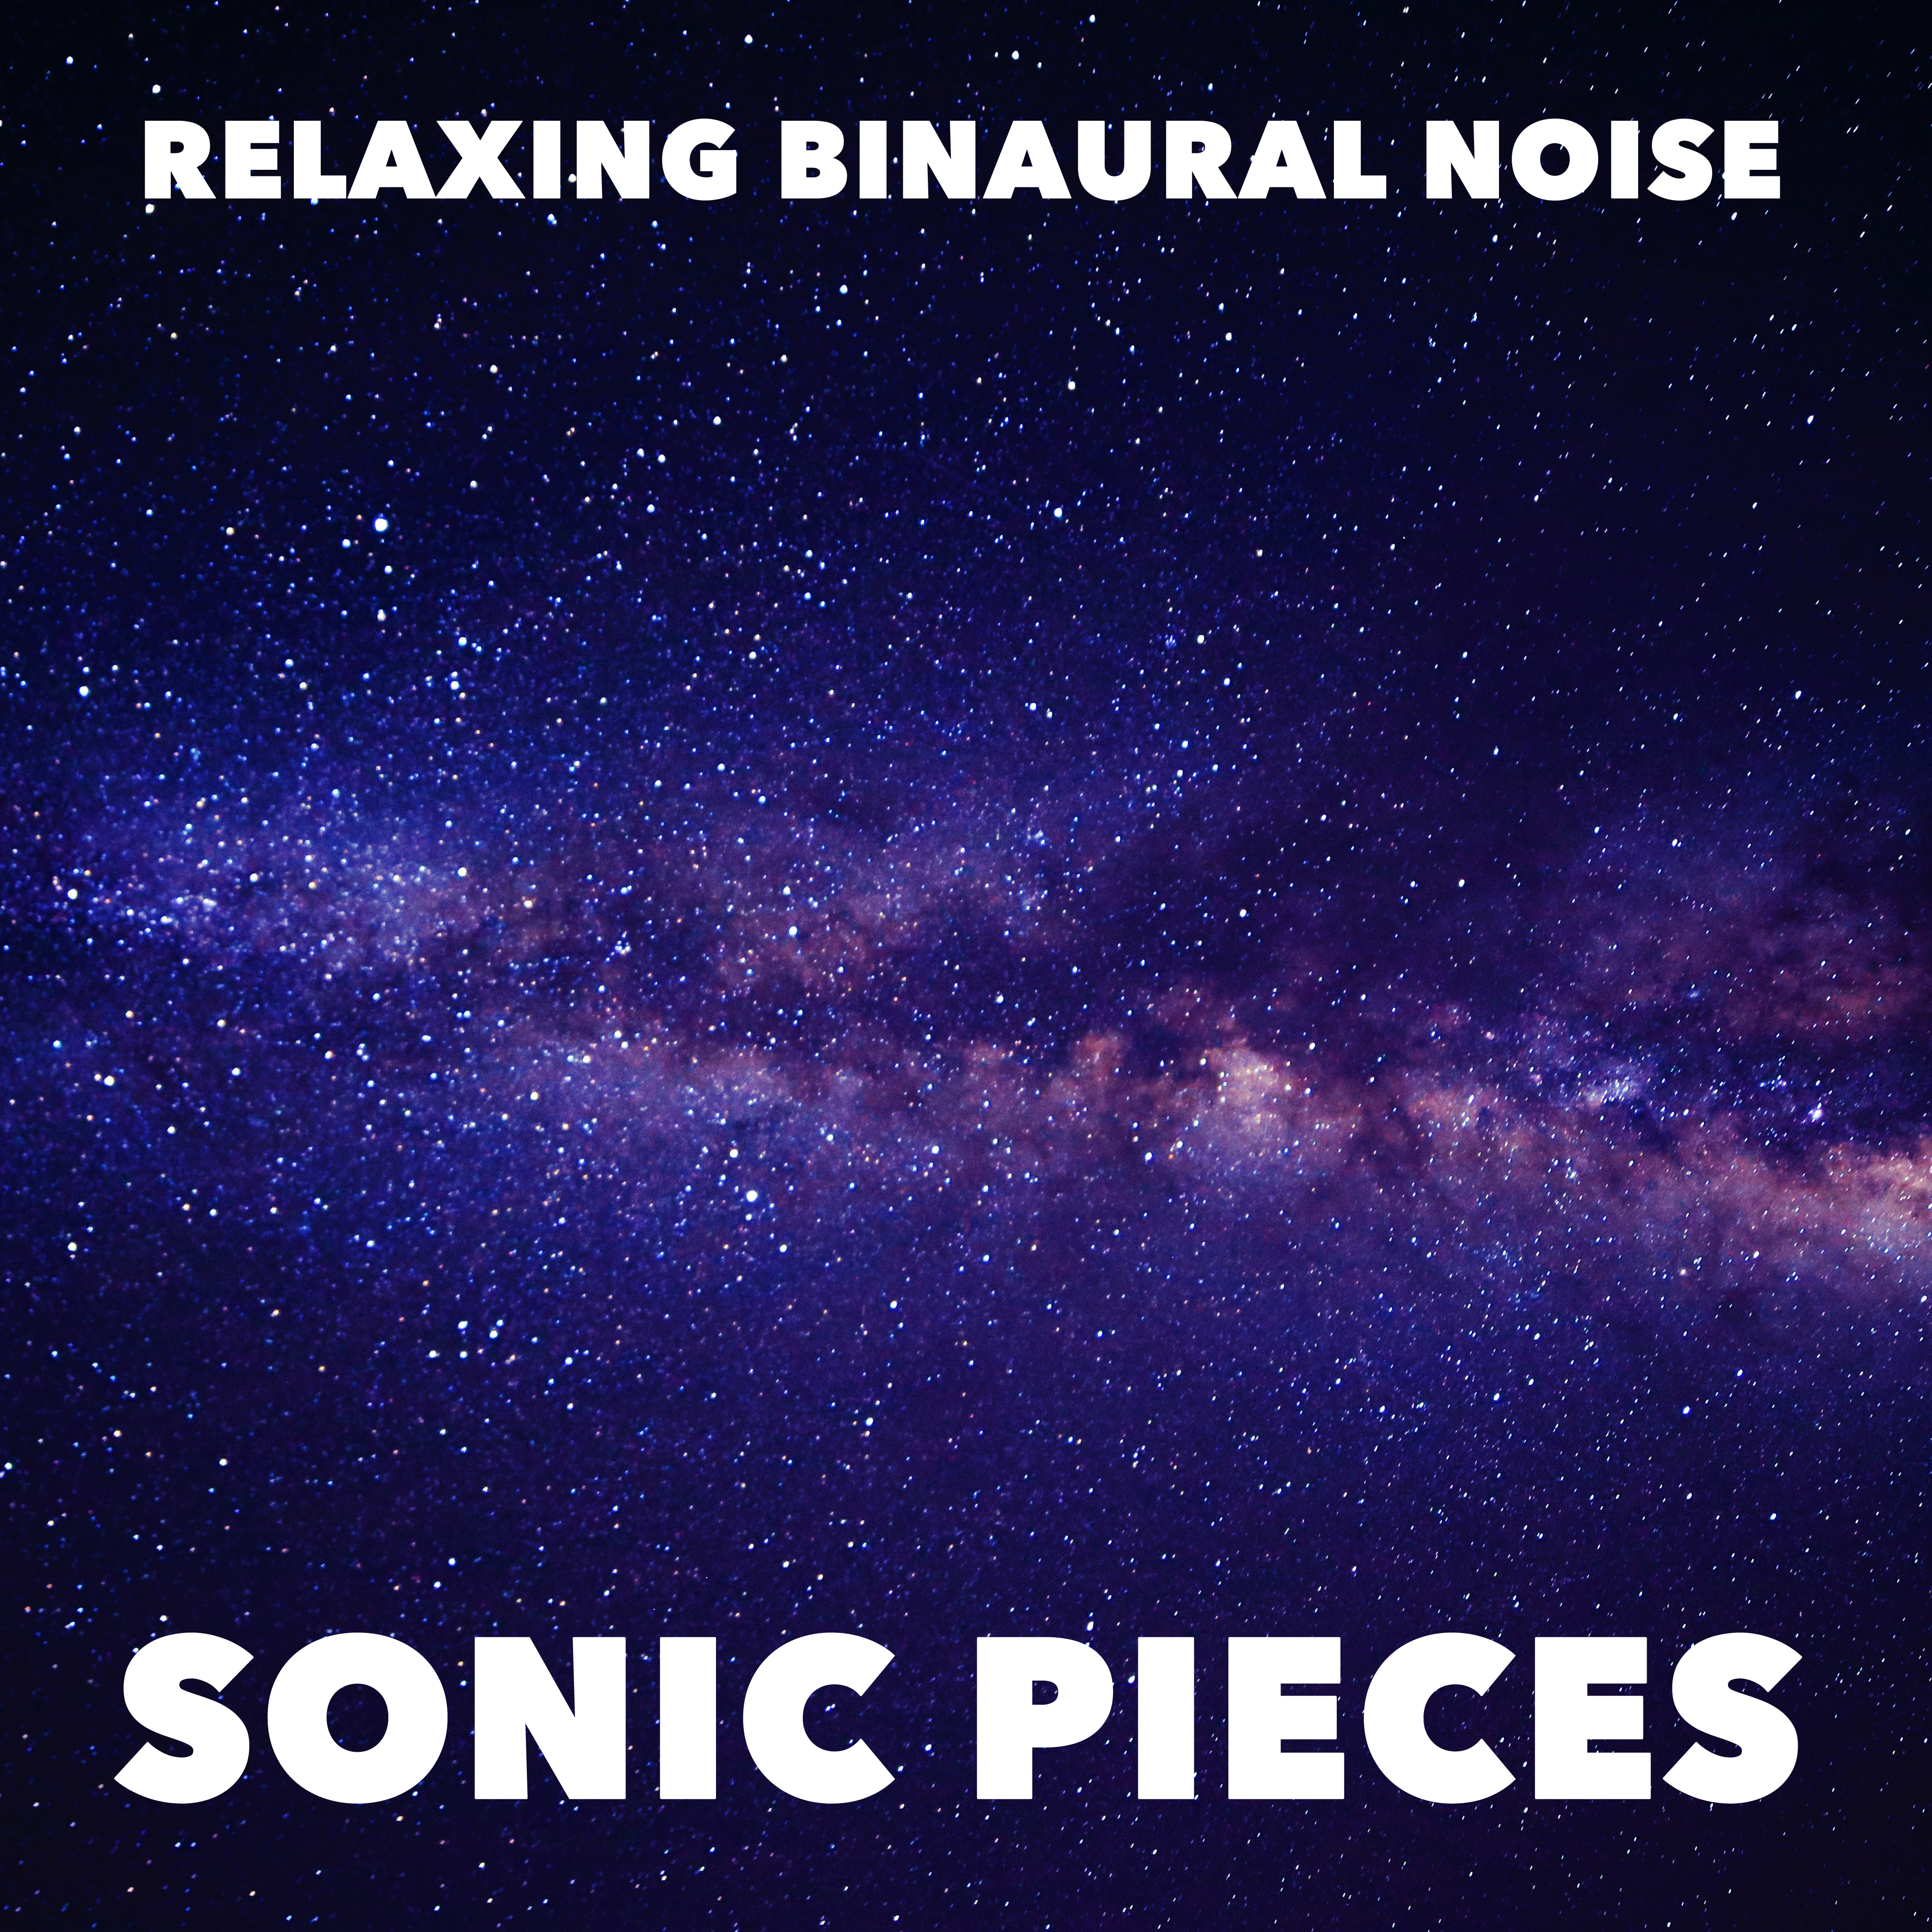 14 Relaxing Binaural Noise Sonic Pieces